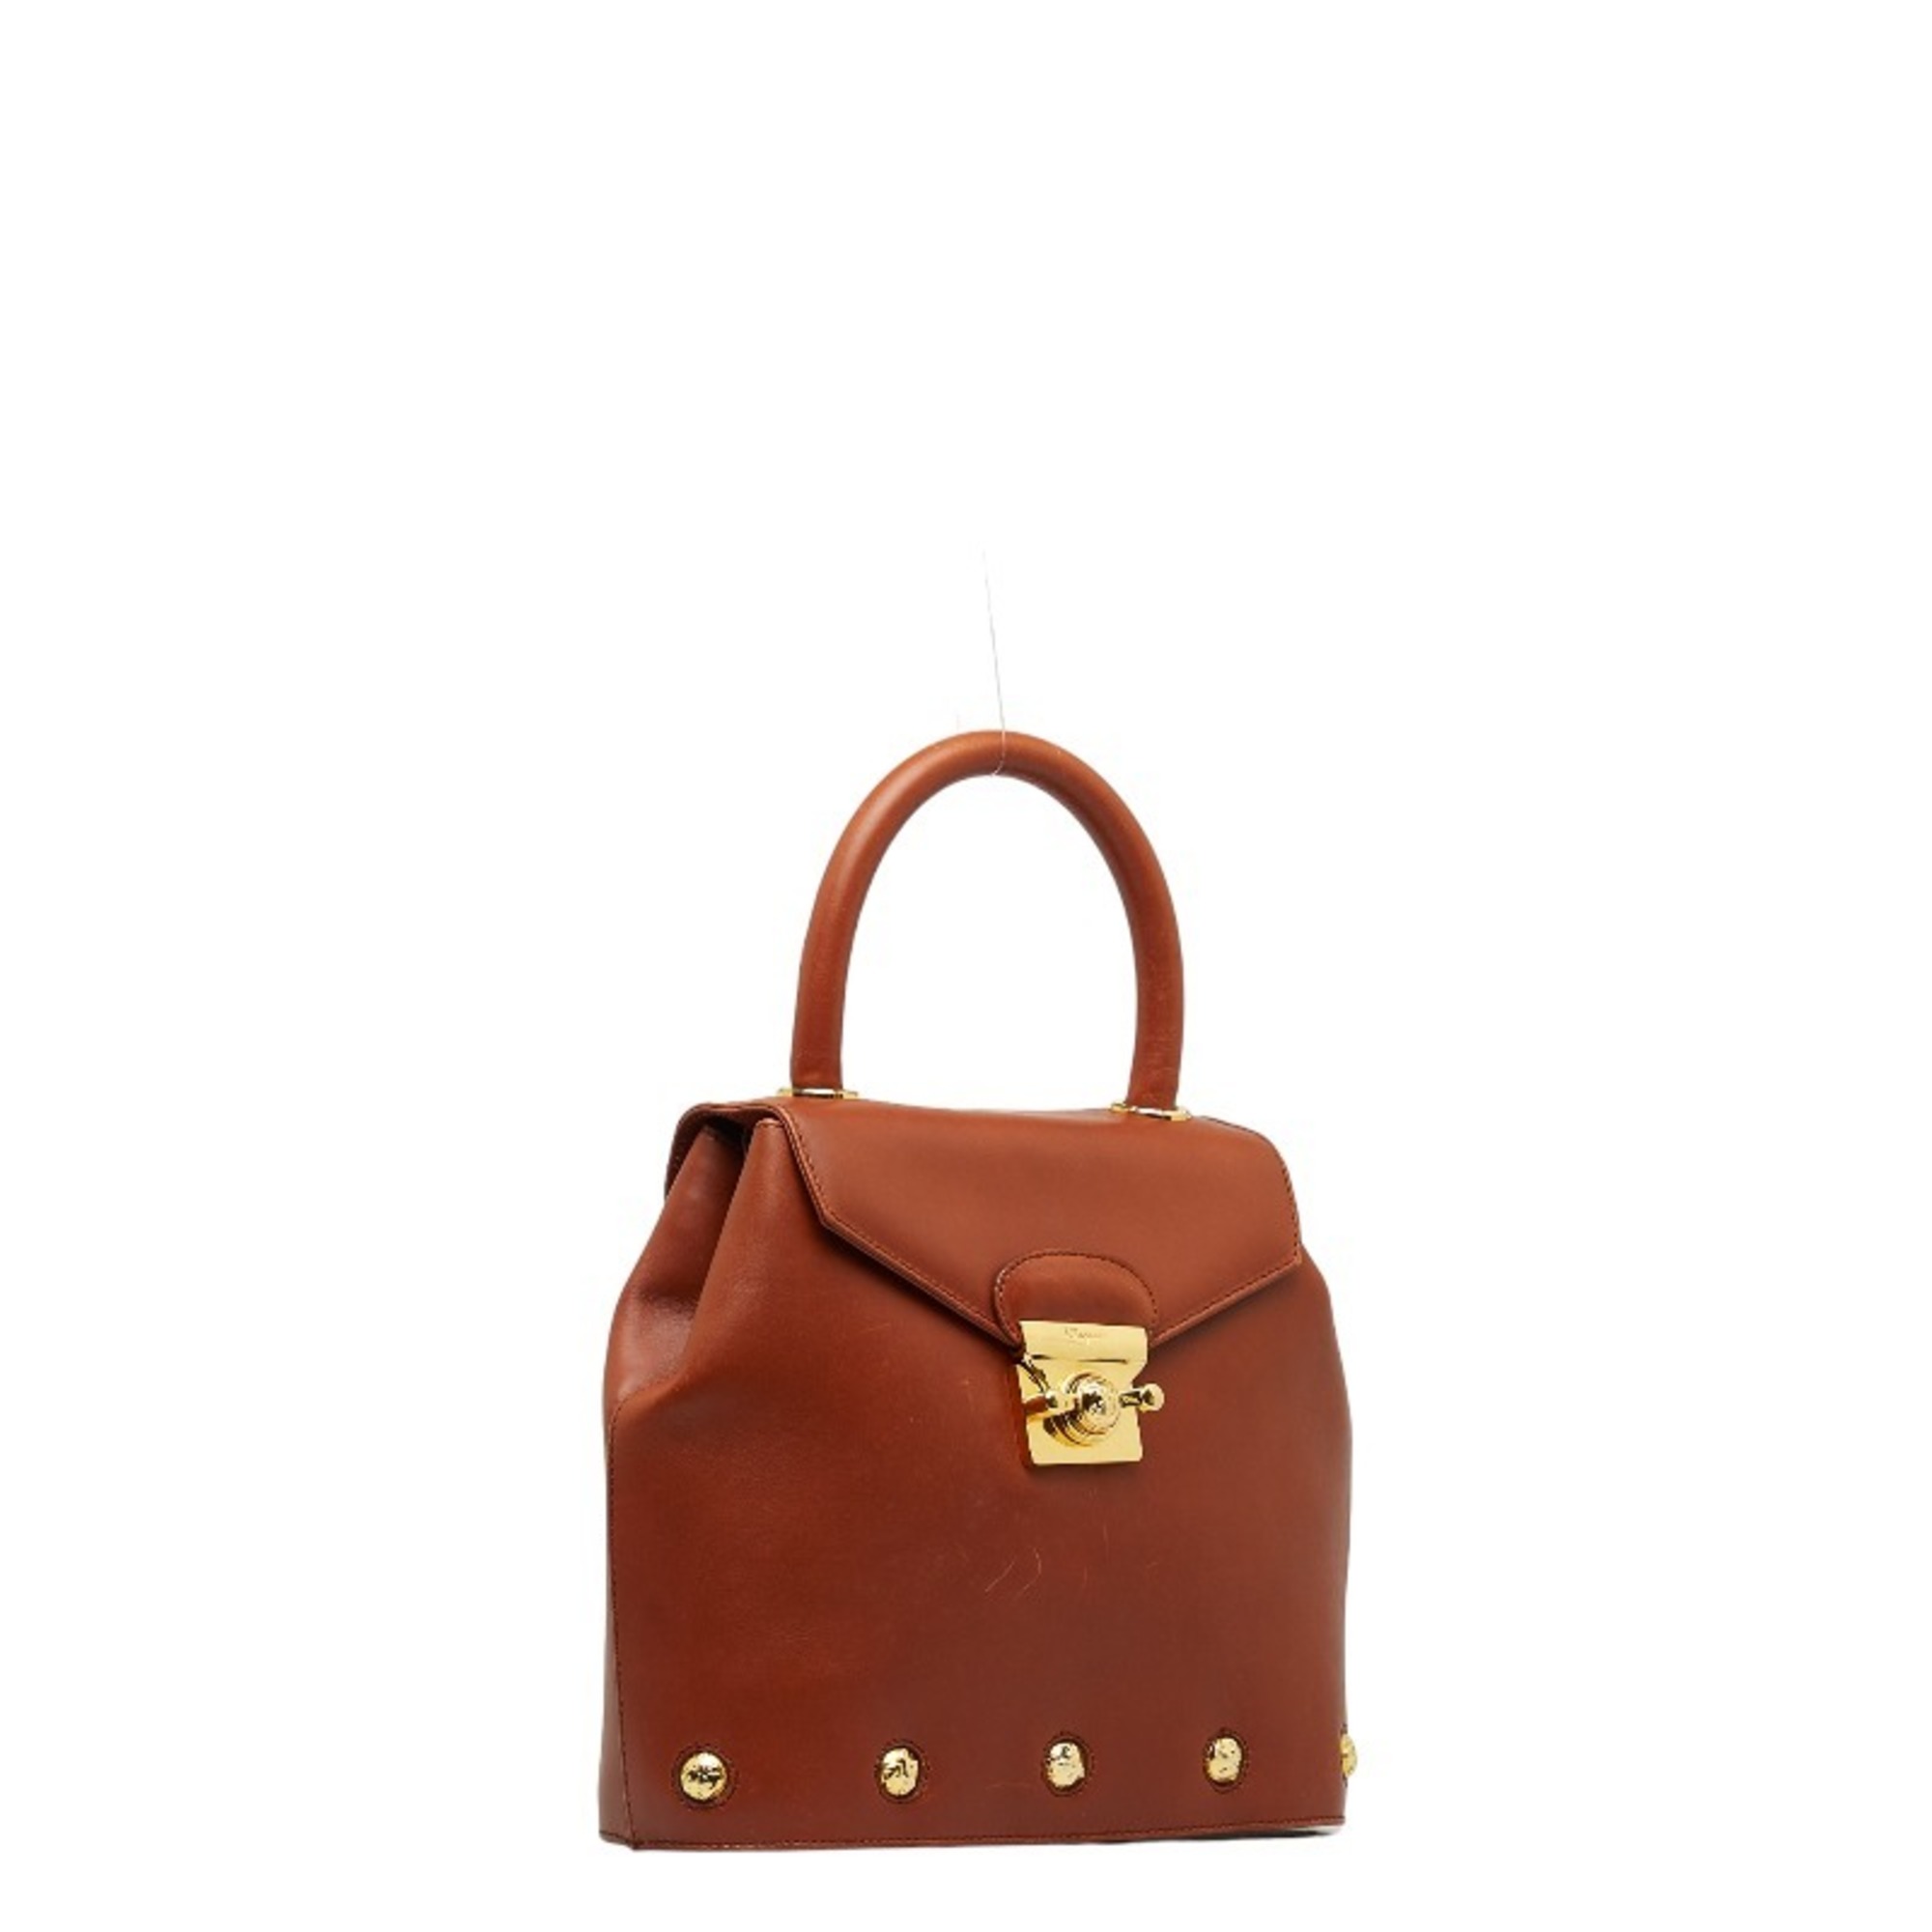 Salvatore Ferragamo Handbag Shoulder Bag AN 21 1668 Brown Leather Ladies